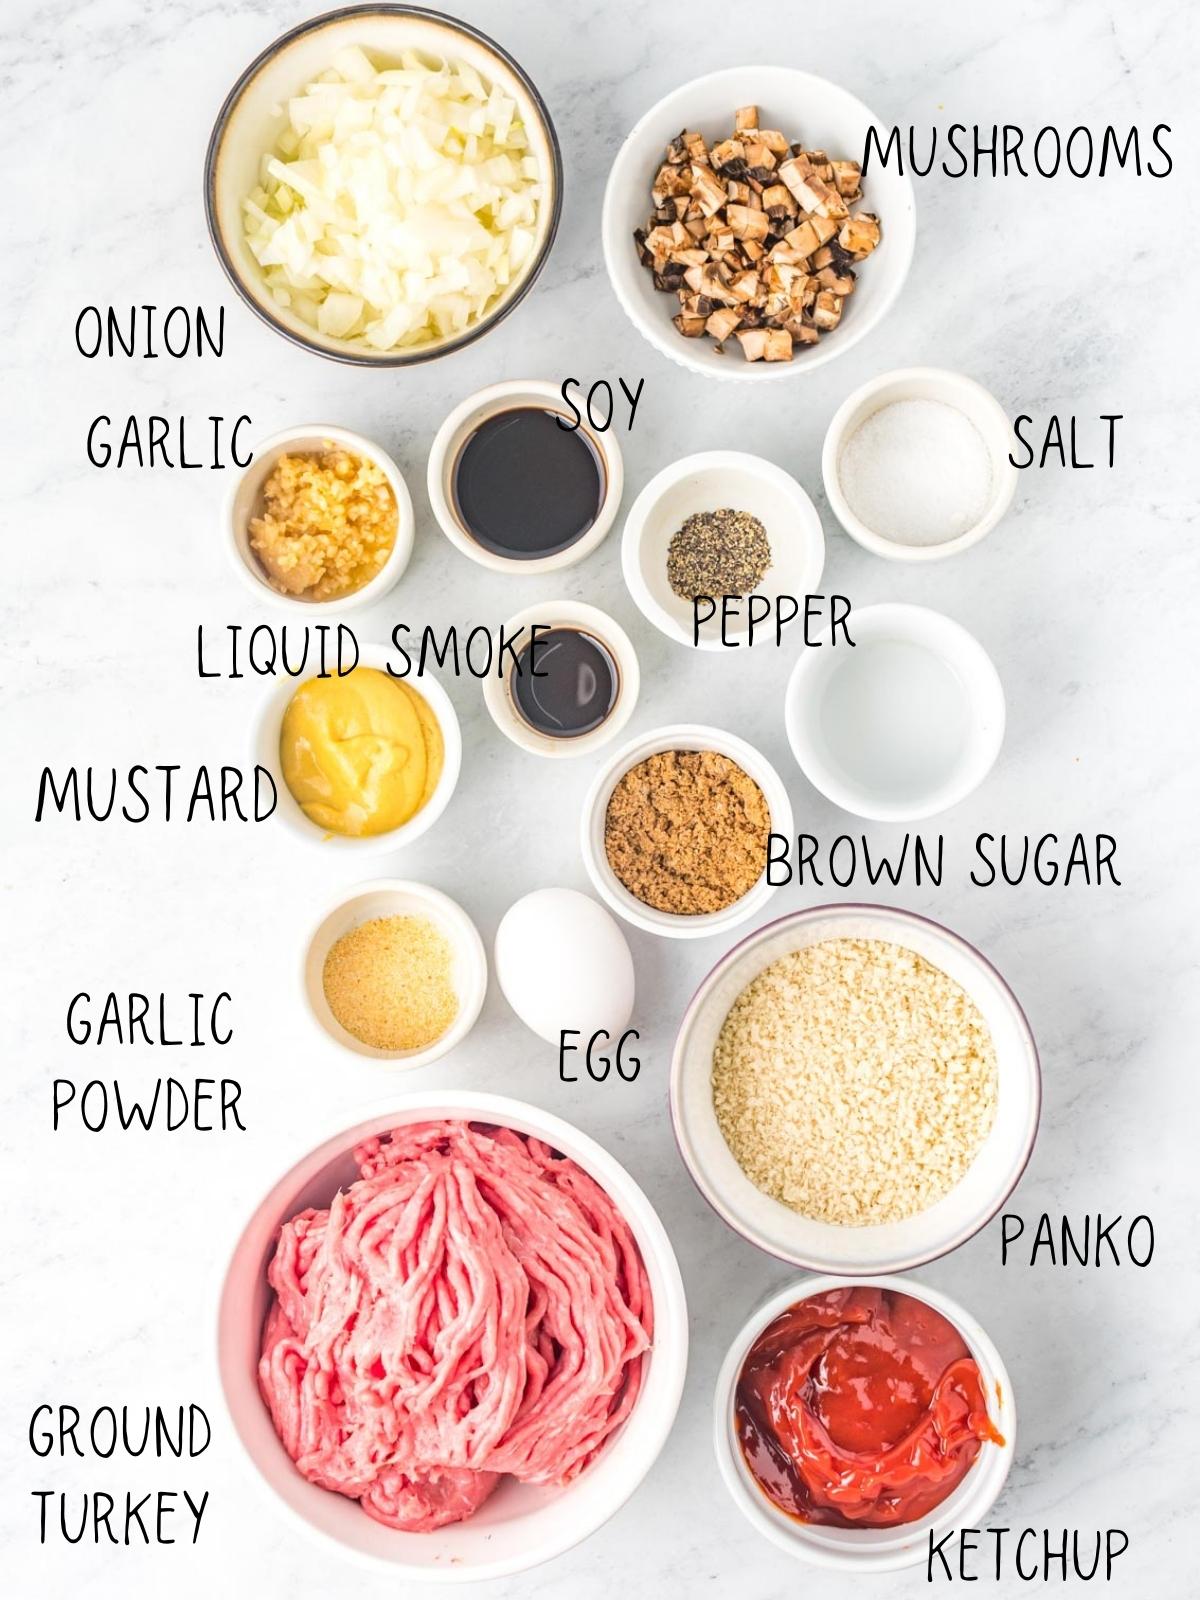 air fryer turkey meatloaf ingredients, including ground turkey, panko, ketchup, garlic powder, mushrooms, egg, brown sugar, mustard